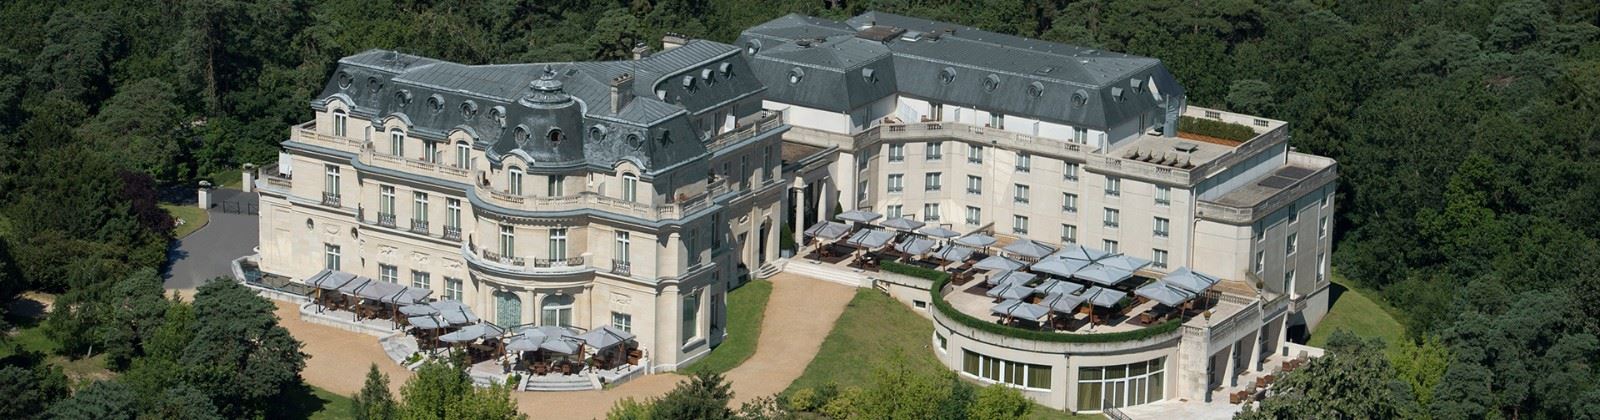 OLEVENE image - Tiara-Chateau-Hotel-Mont-Royal-olevene-